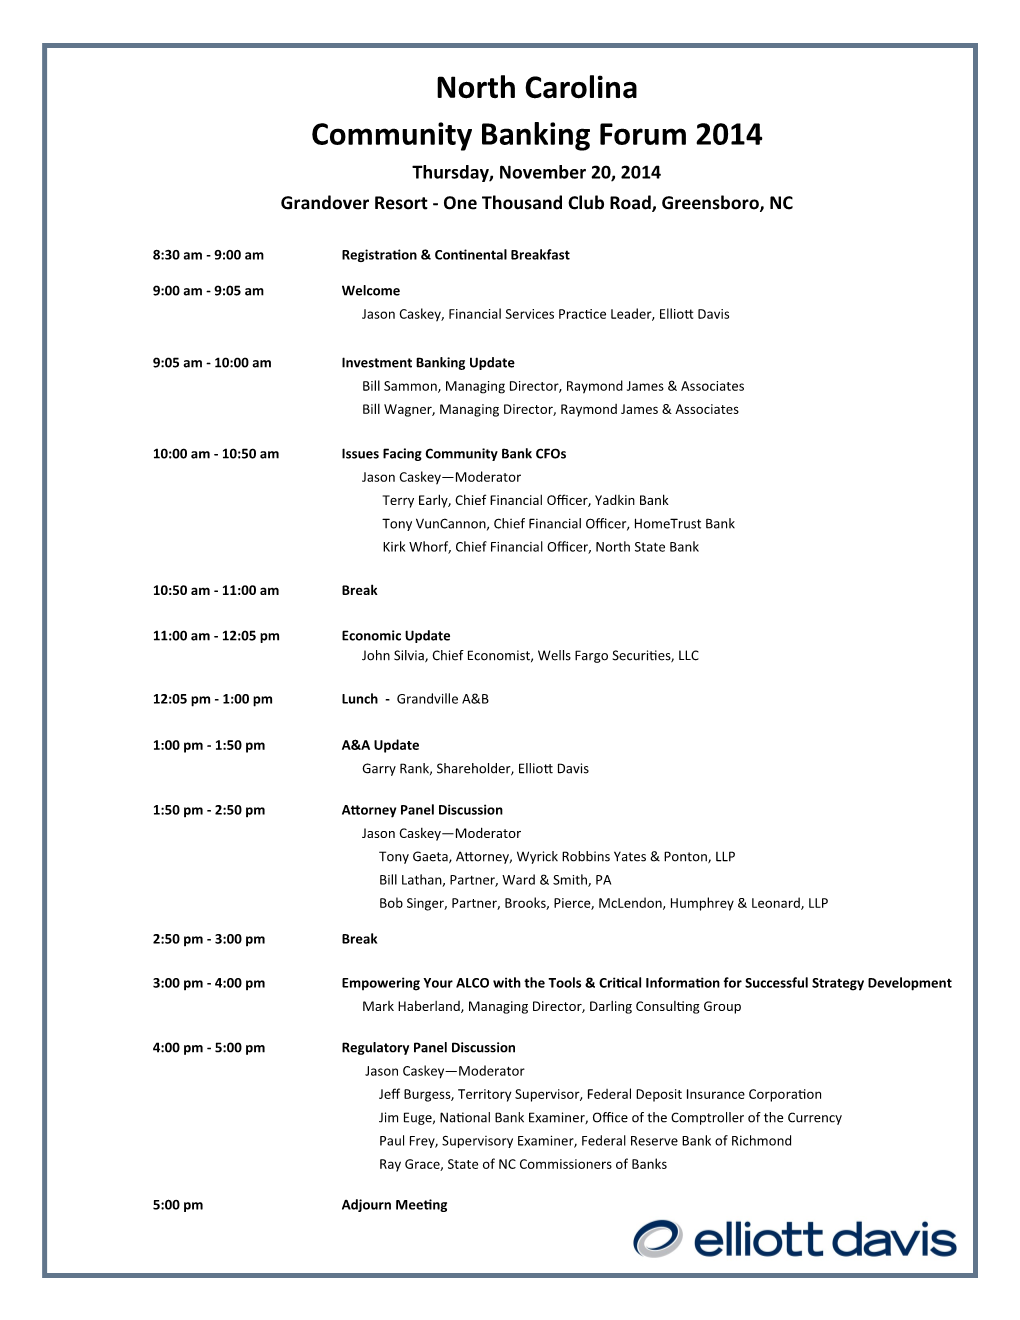 North Carolina Community Banking Forum 2014 Thursday, November 20, 2014 Grandover Resort - One Thousand Club Road, Greensboro, NC